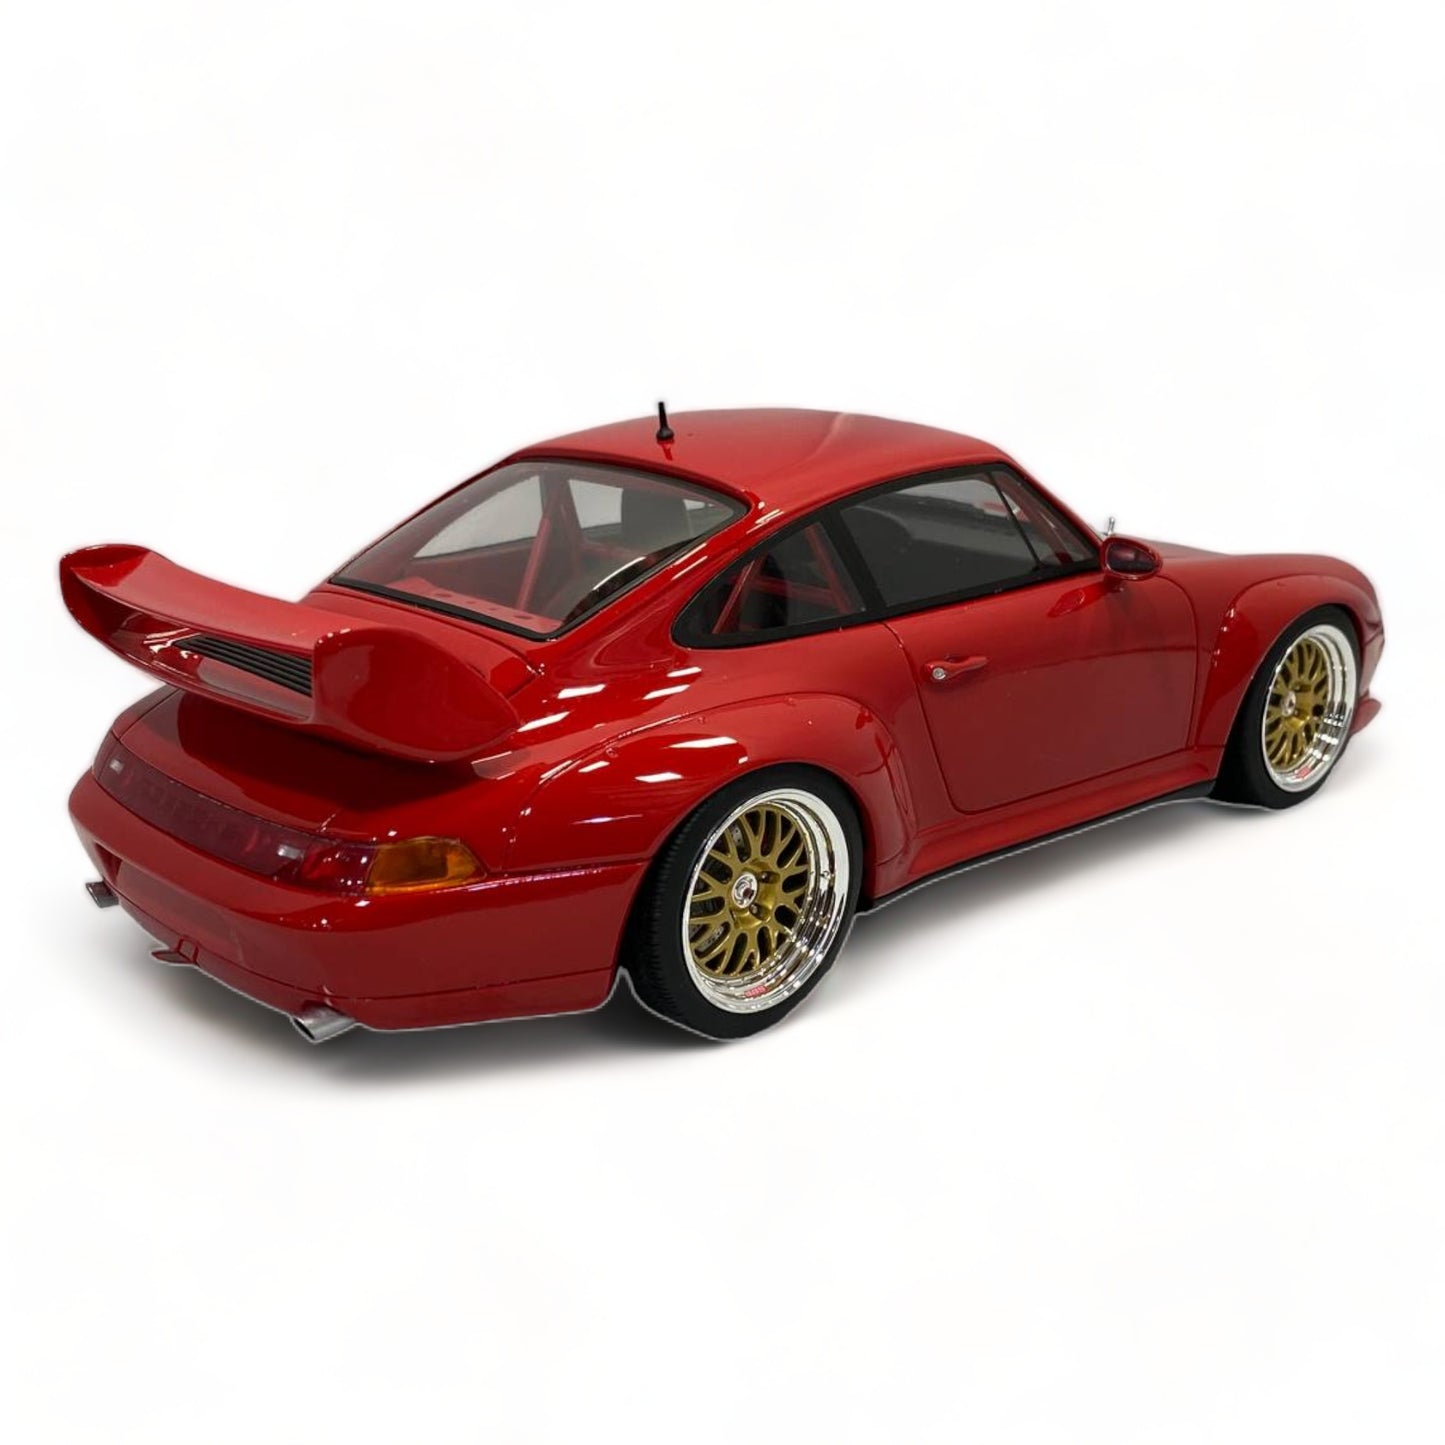 1/18 Diecast GT Spirit Porsche 911 RSR 964 in Red Scale Model Car|Sold in Dturman.com Dubai UAE.